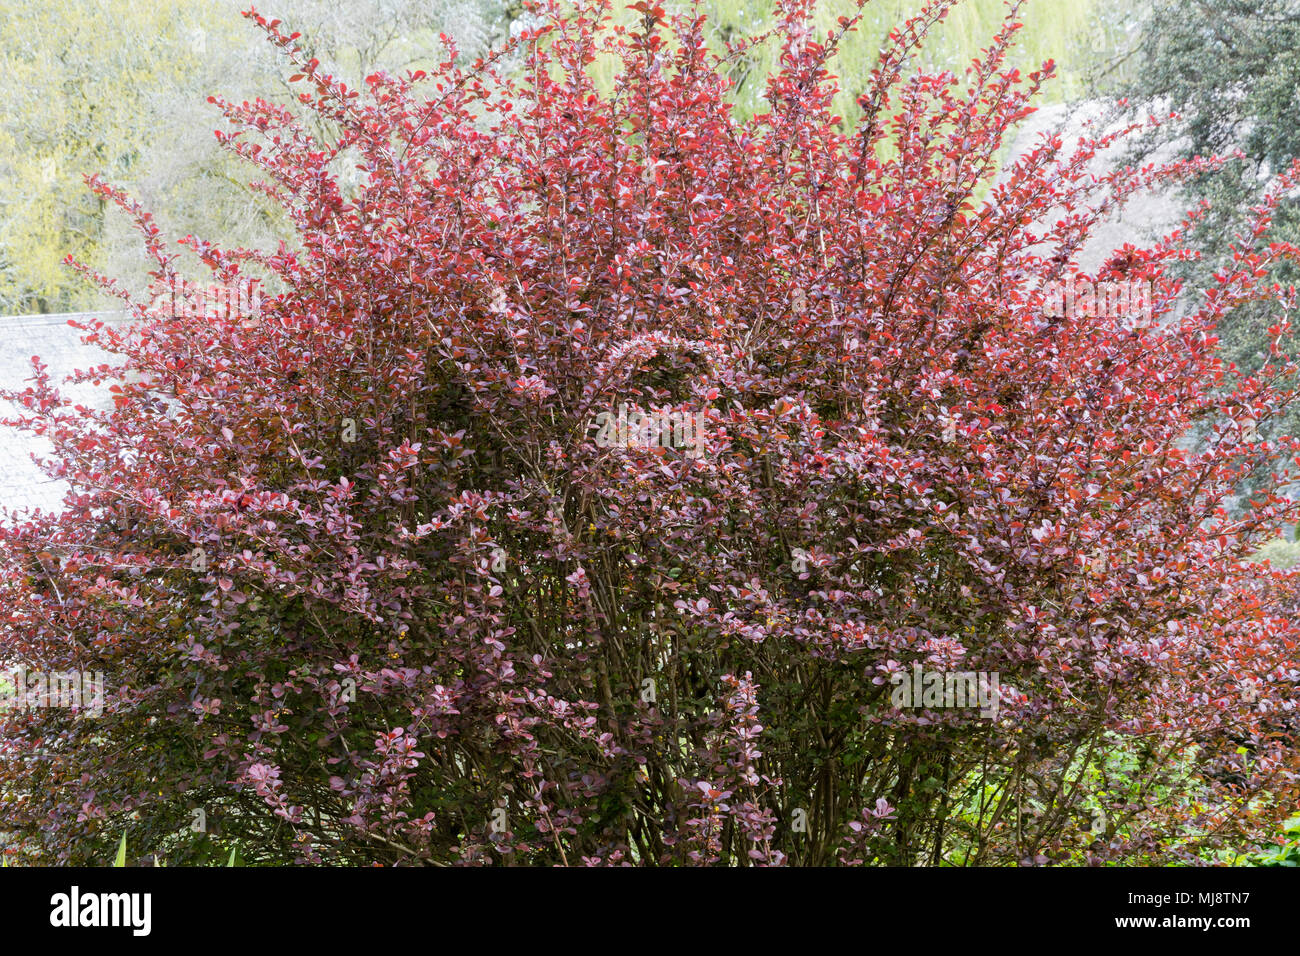 Red purple foliage of the hardy deciduous Purple barberry shrub, Berberis ottawensis f. purpurea 'Superba' Stock Photo